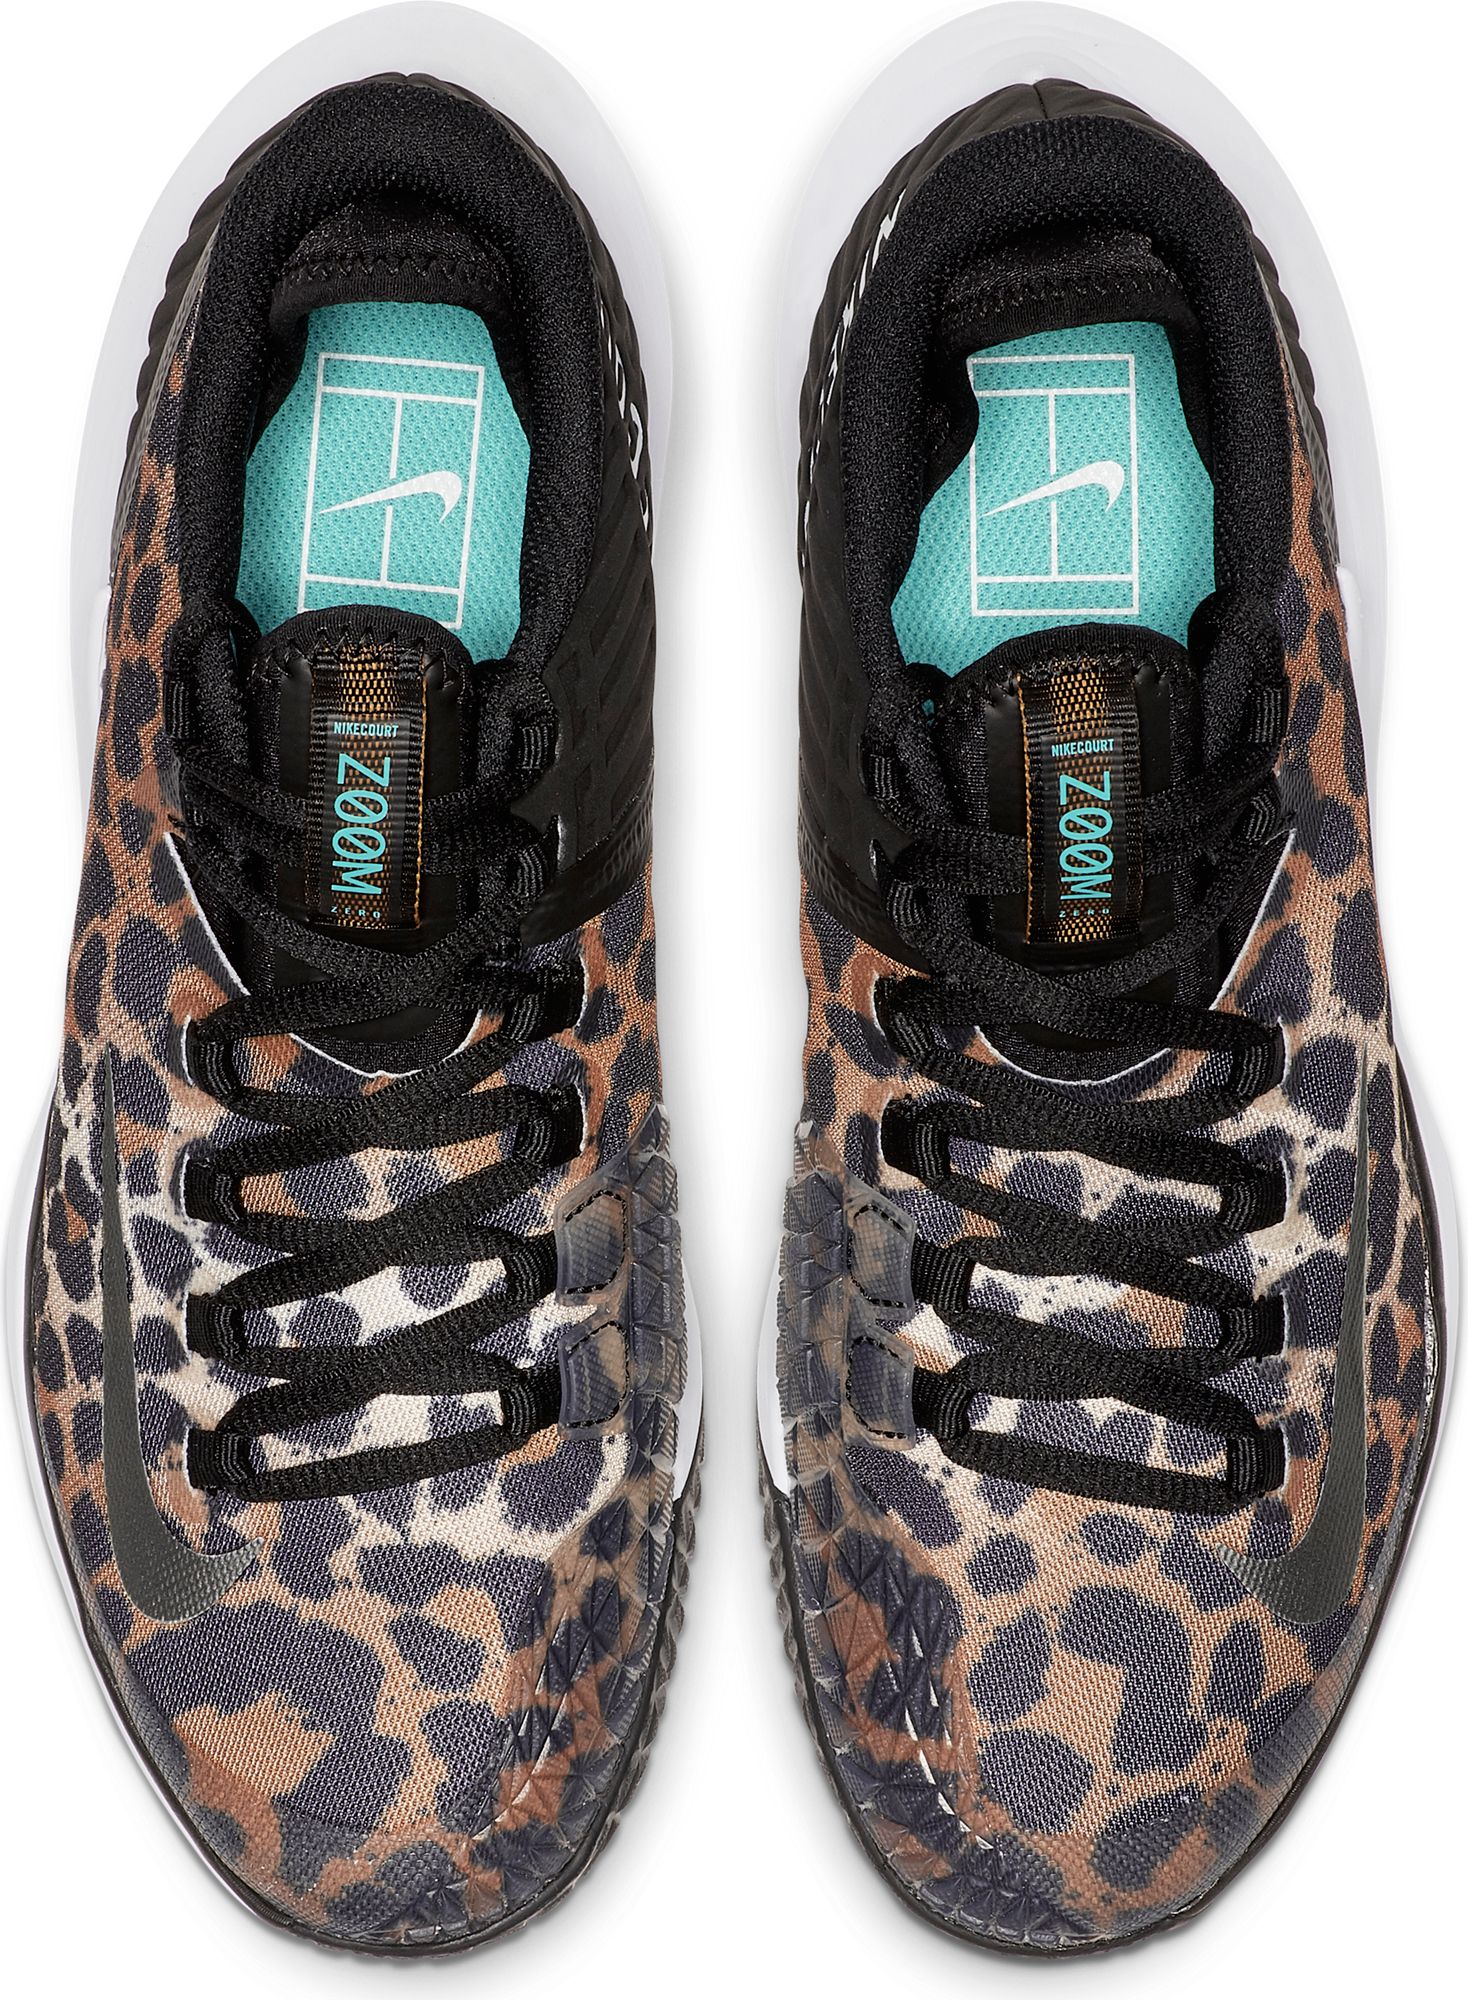 nike women's court air zoom zero tennis shoes leopard